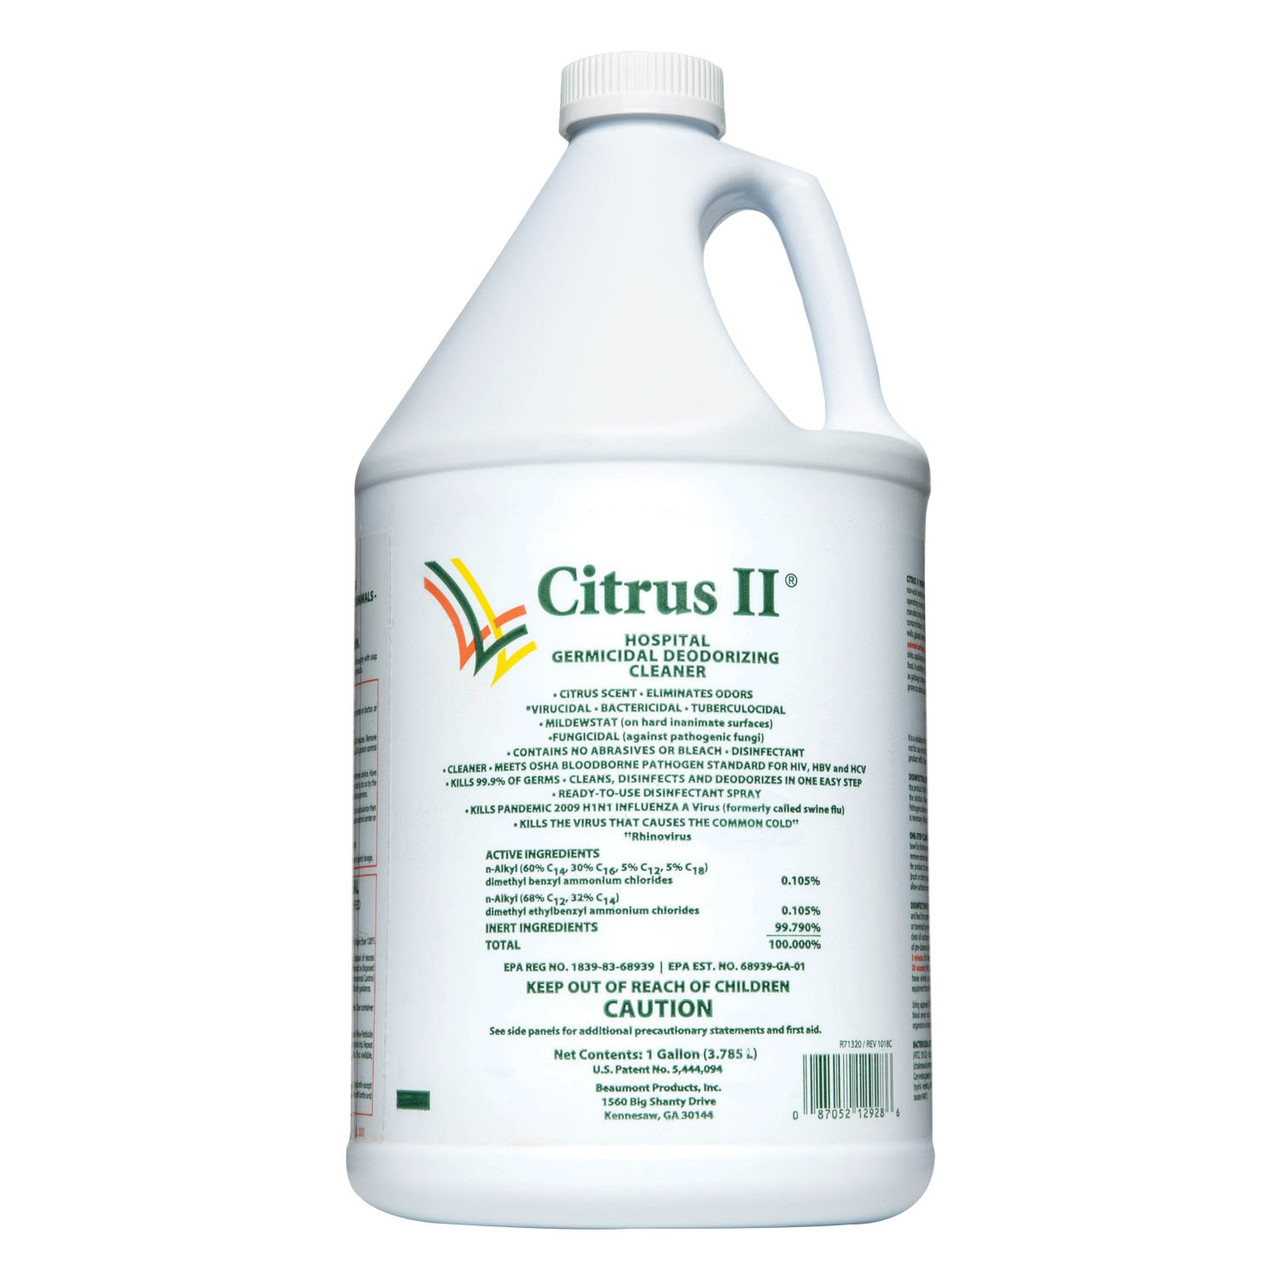 Citrus II Hospital Germicidal Deodorizing Cleaner - 1 gl (3.785 lt)